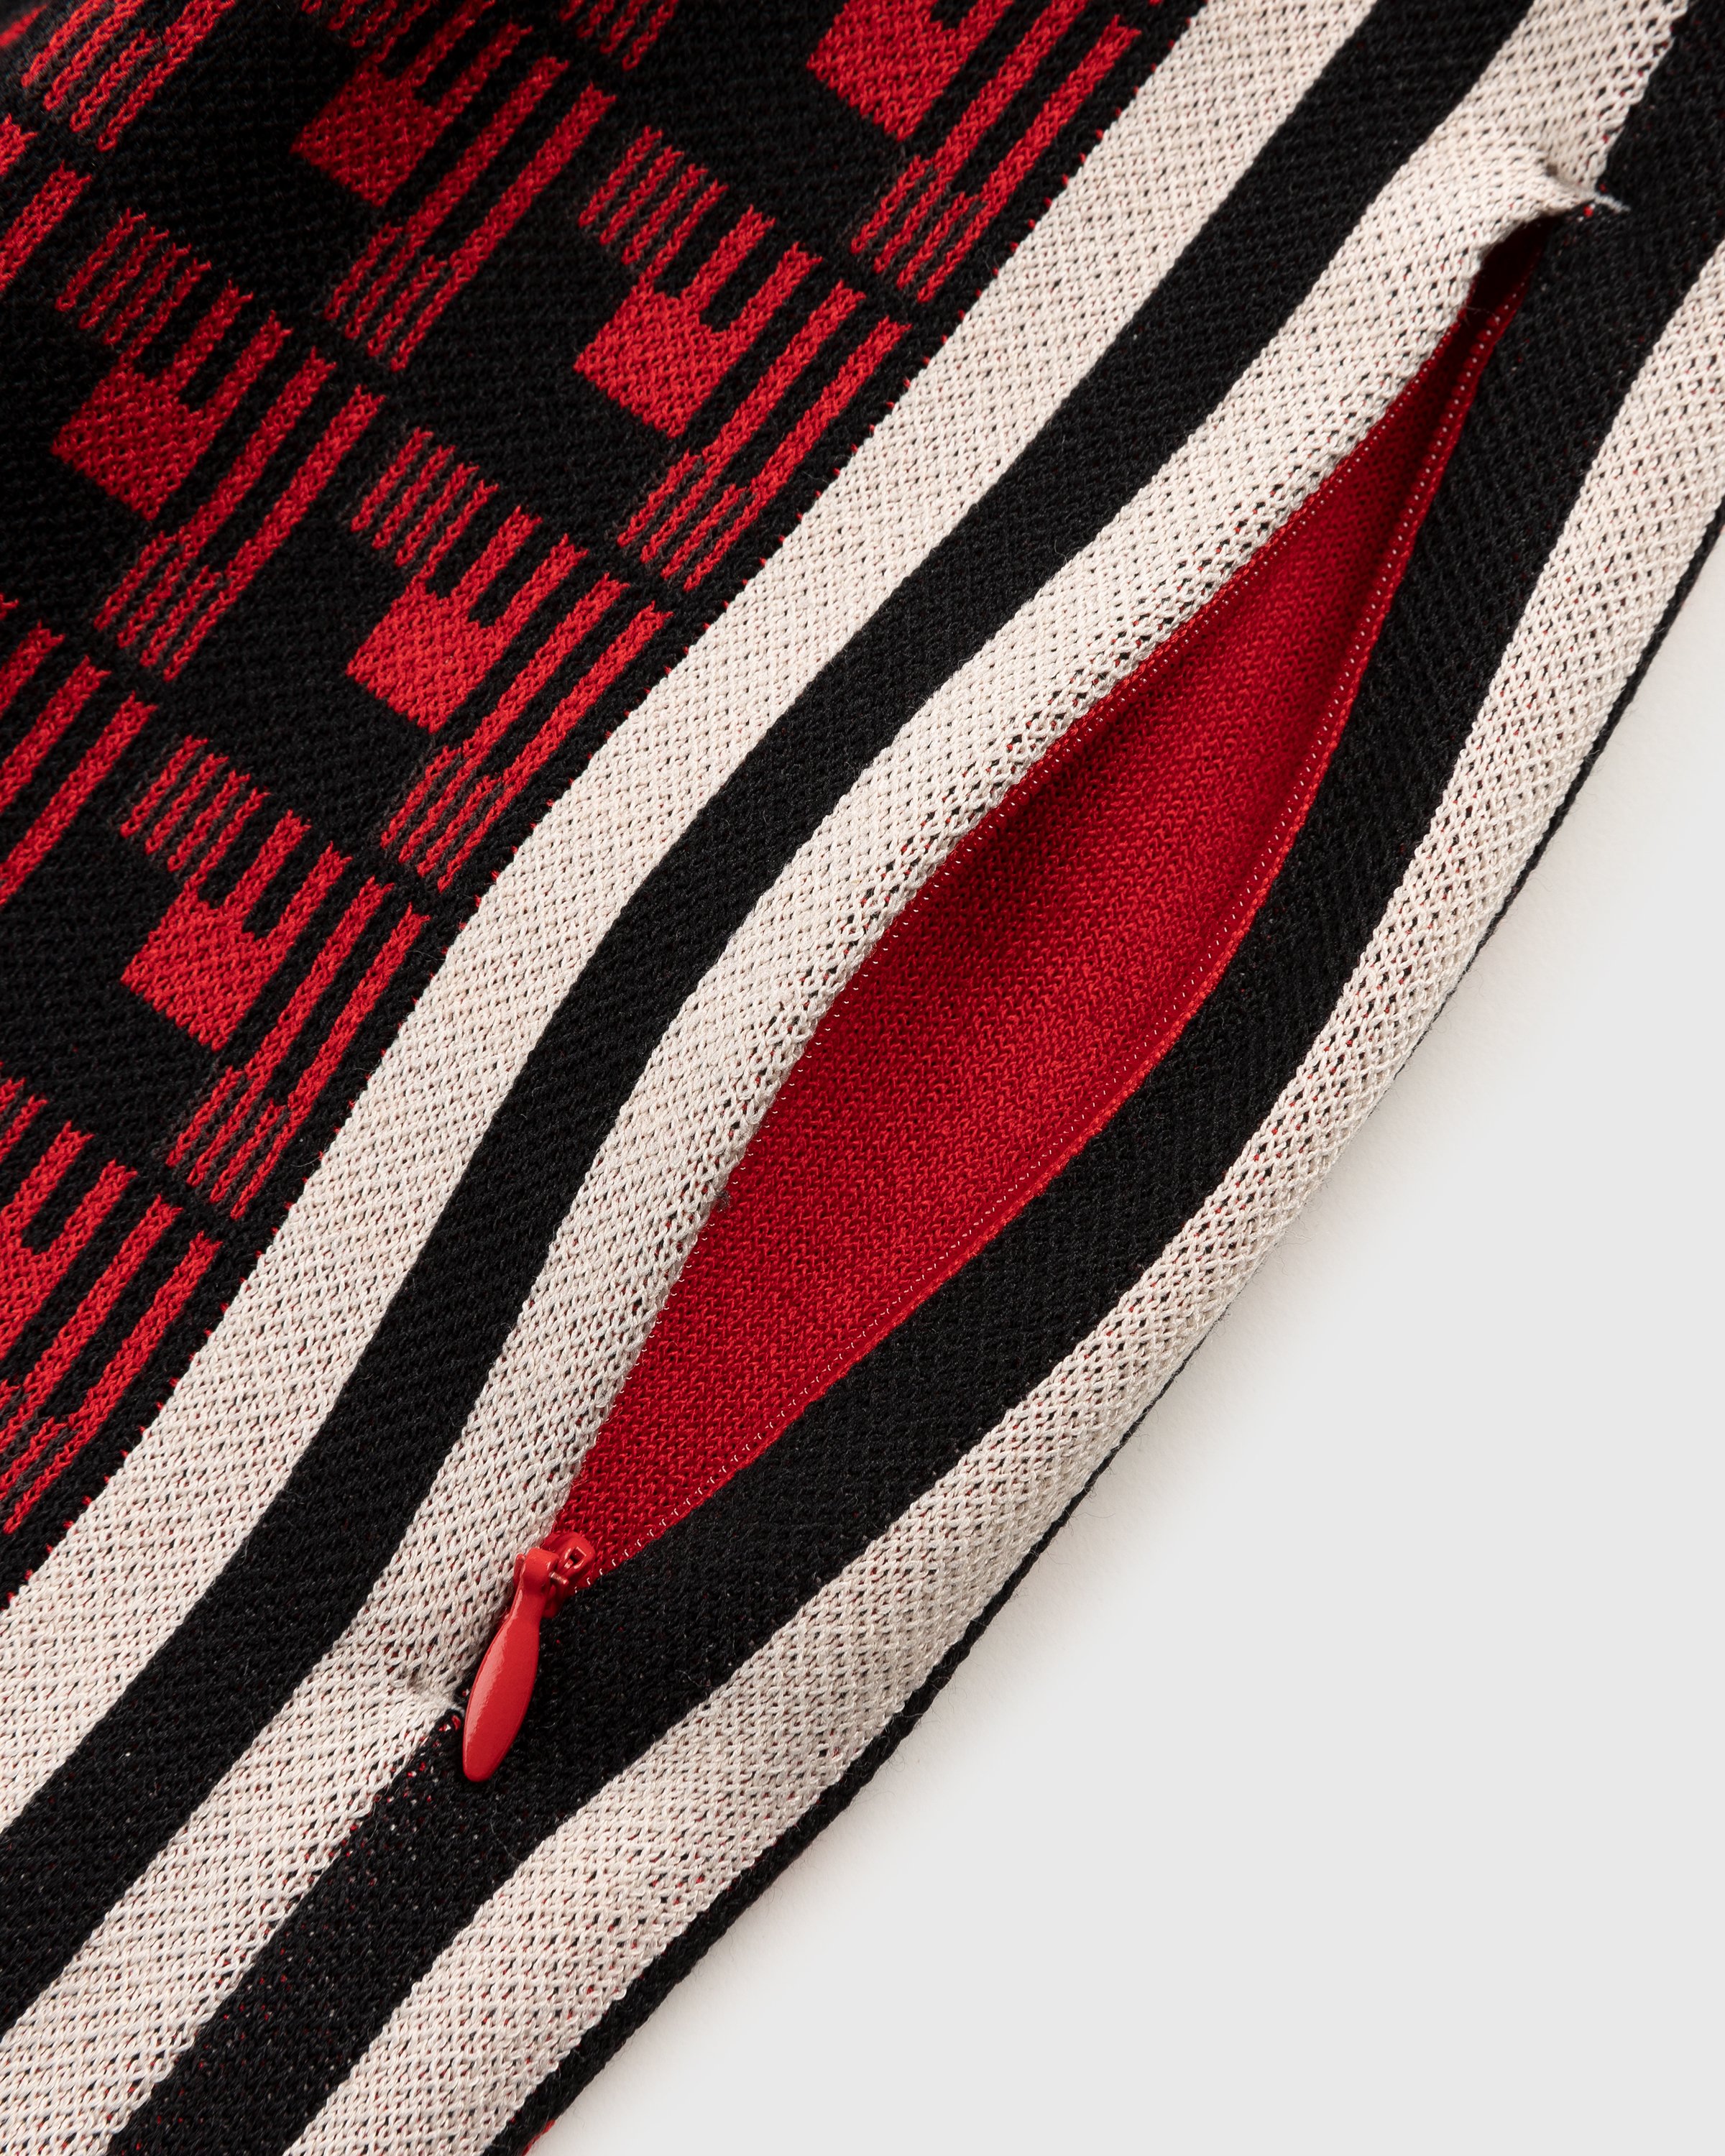 Adidas x Wales Bonner - WB Knit Shorts Scarlet/Black - Clothing - Red - Image 4